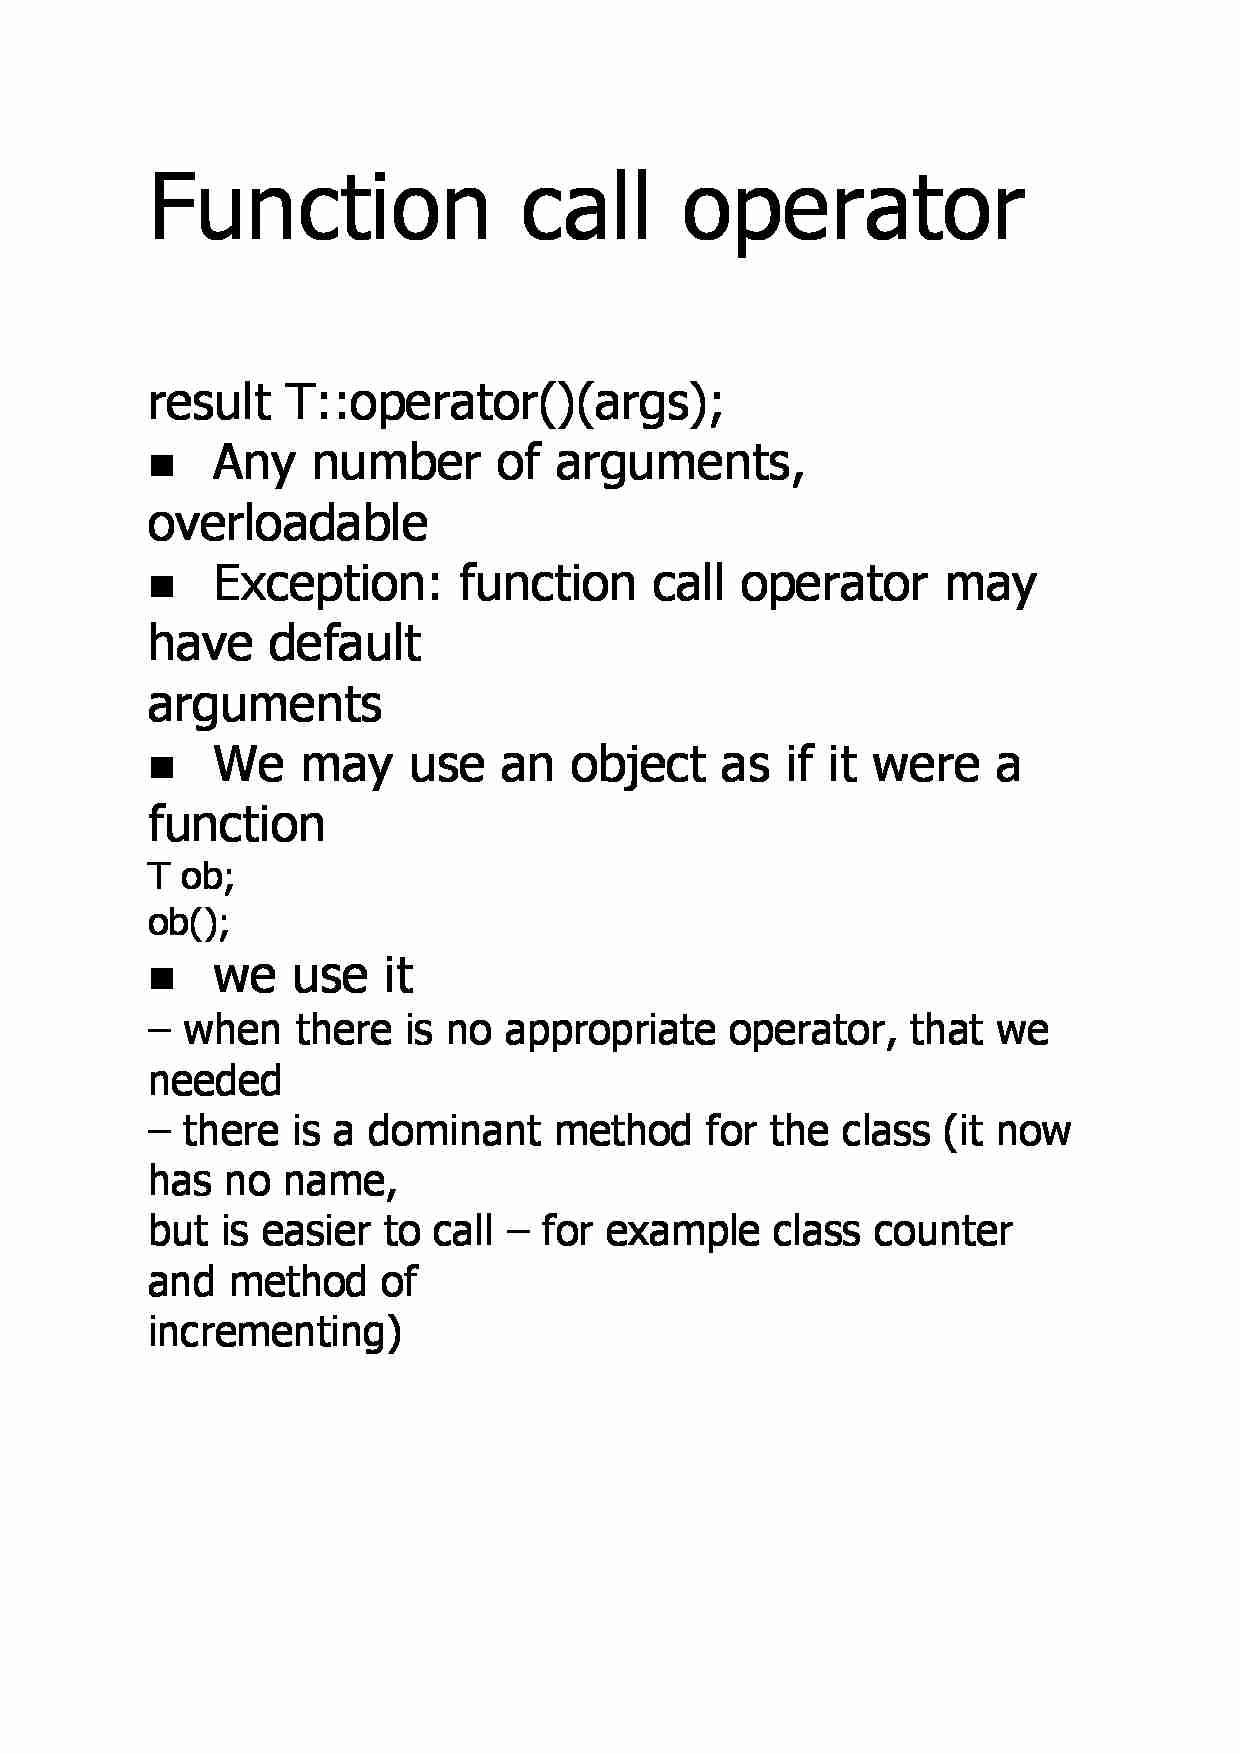 Function call operator - strona 1